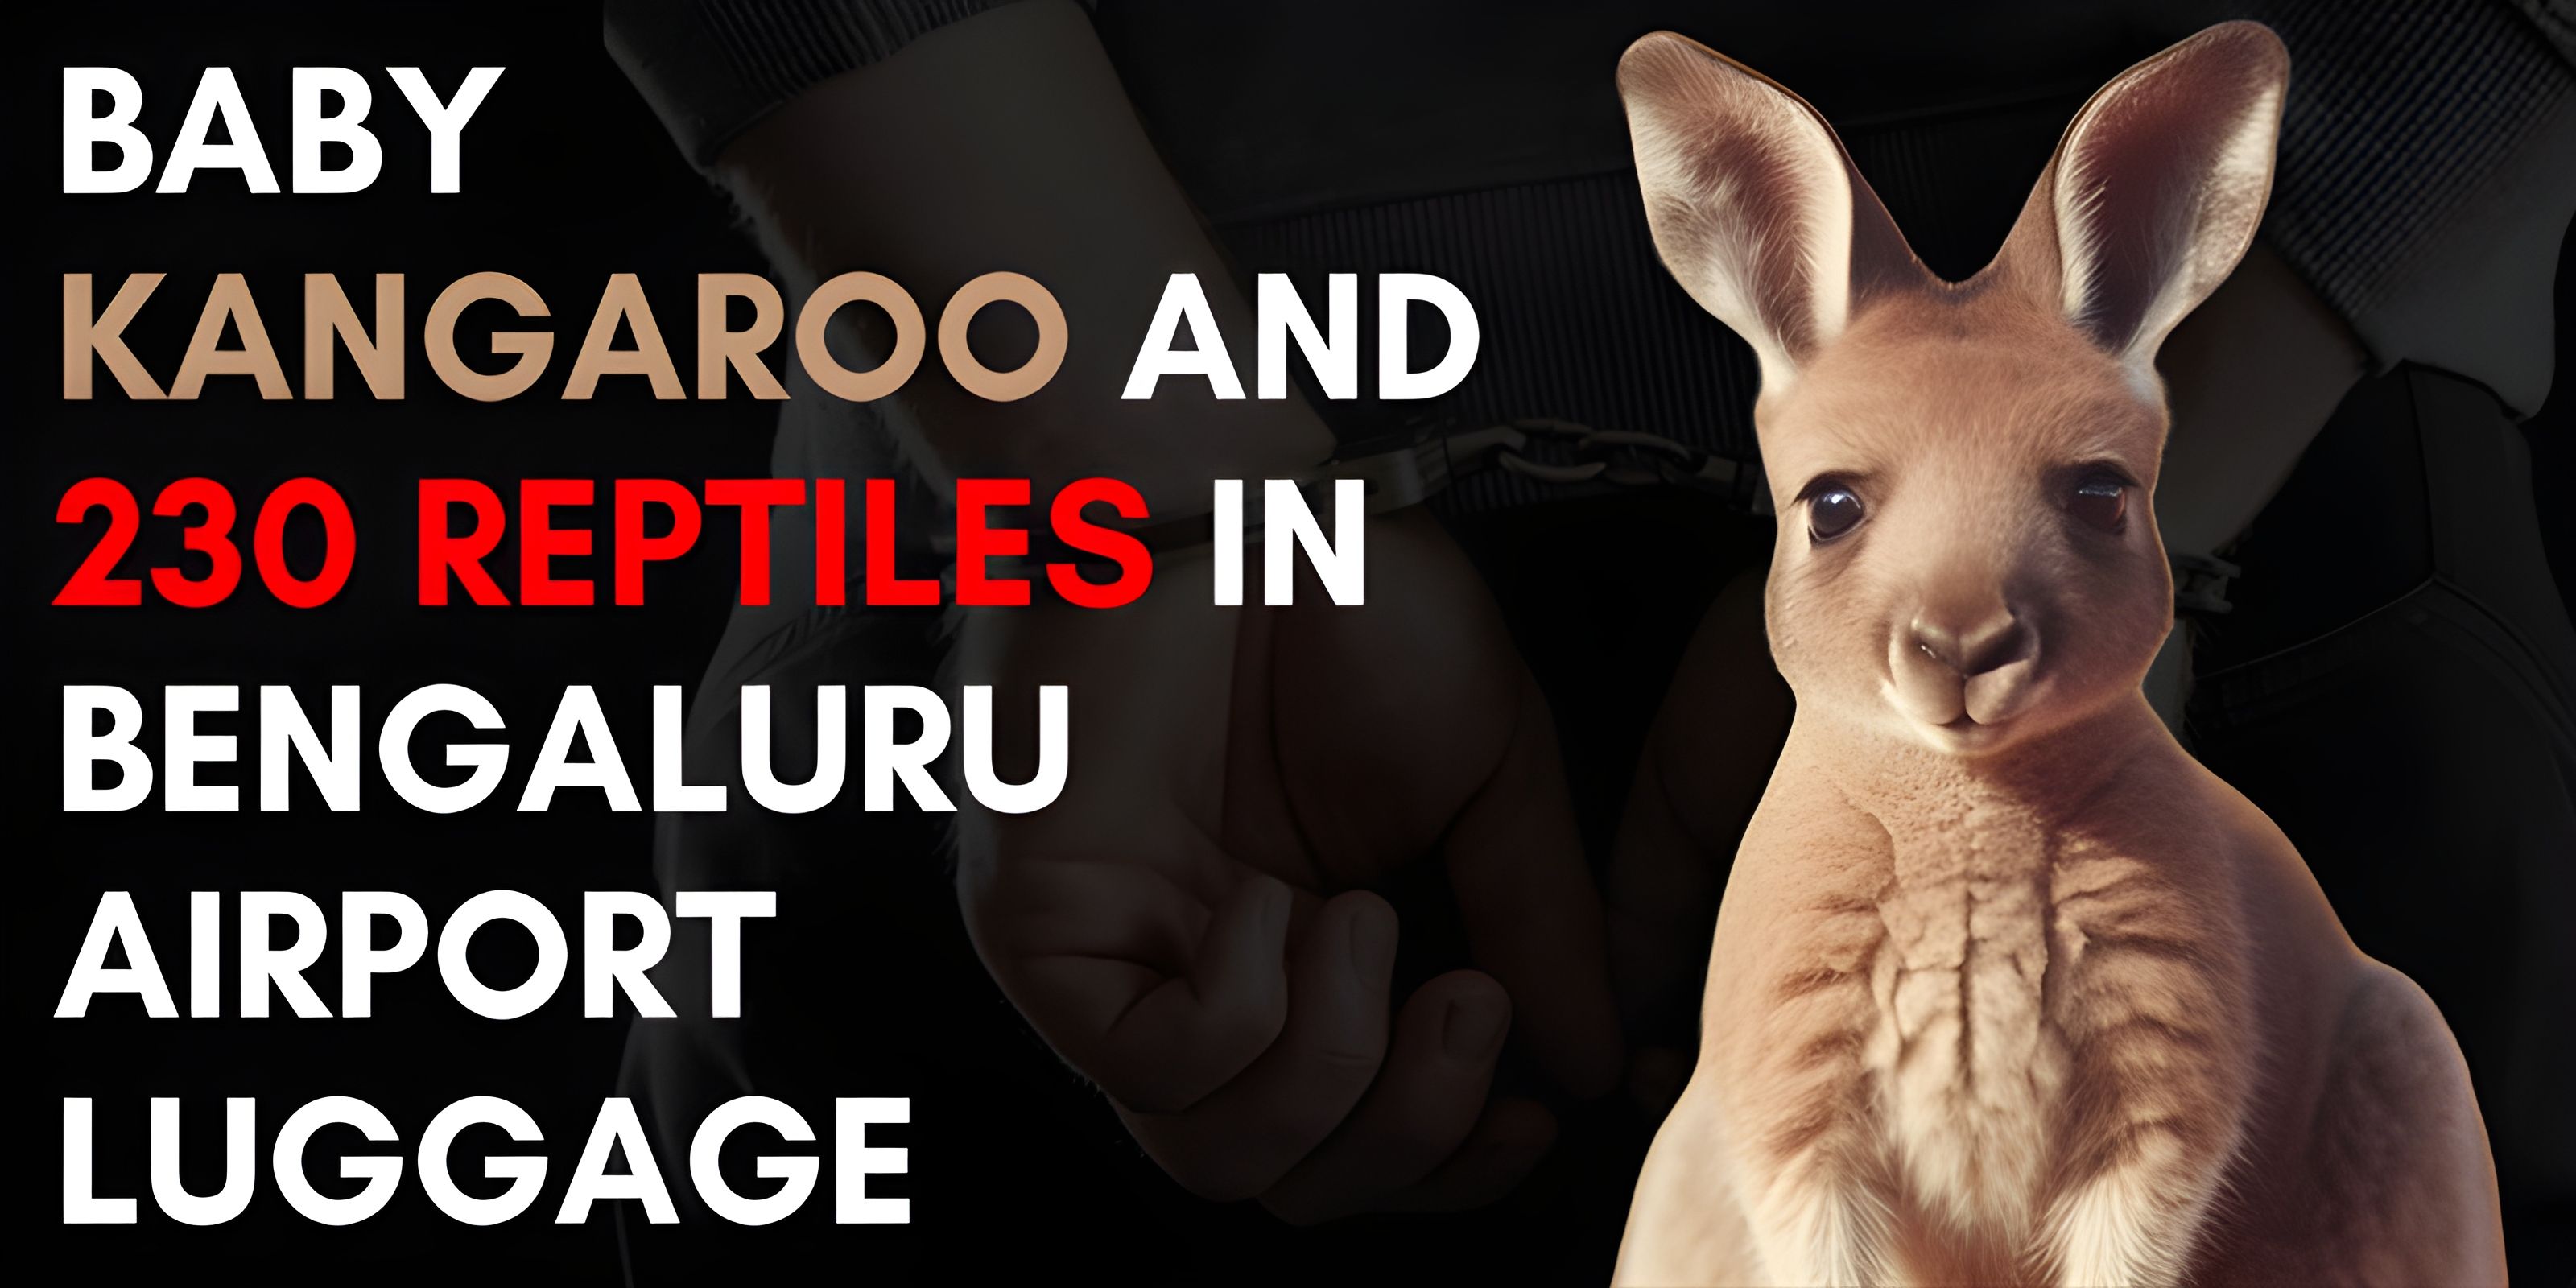 Baby Kangaroo and 230 Reptiles in Bengaluru Airport Luggage